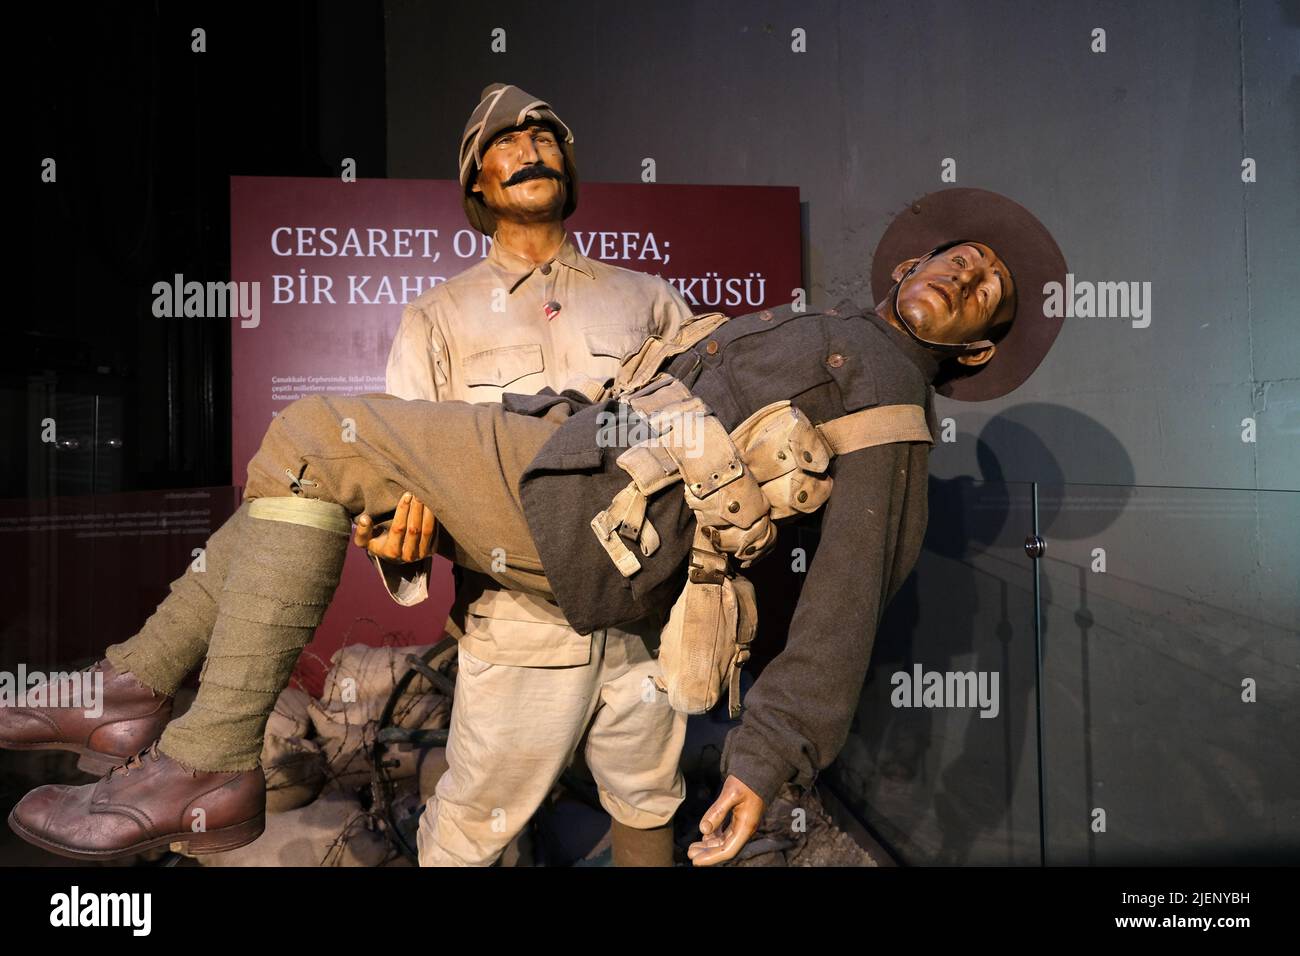 Representative battle scene from World War One in the War Museum in Gallipoli Turkey Stock Photo